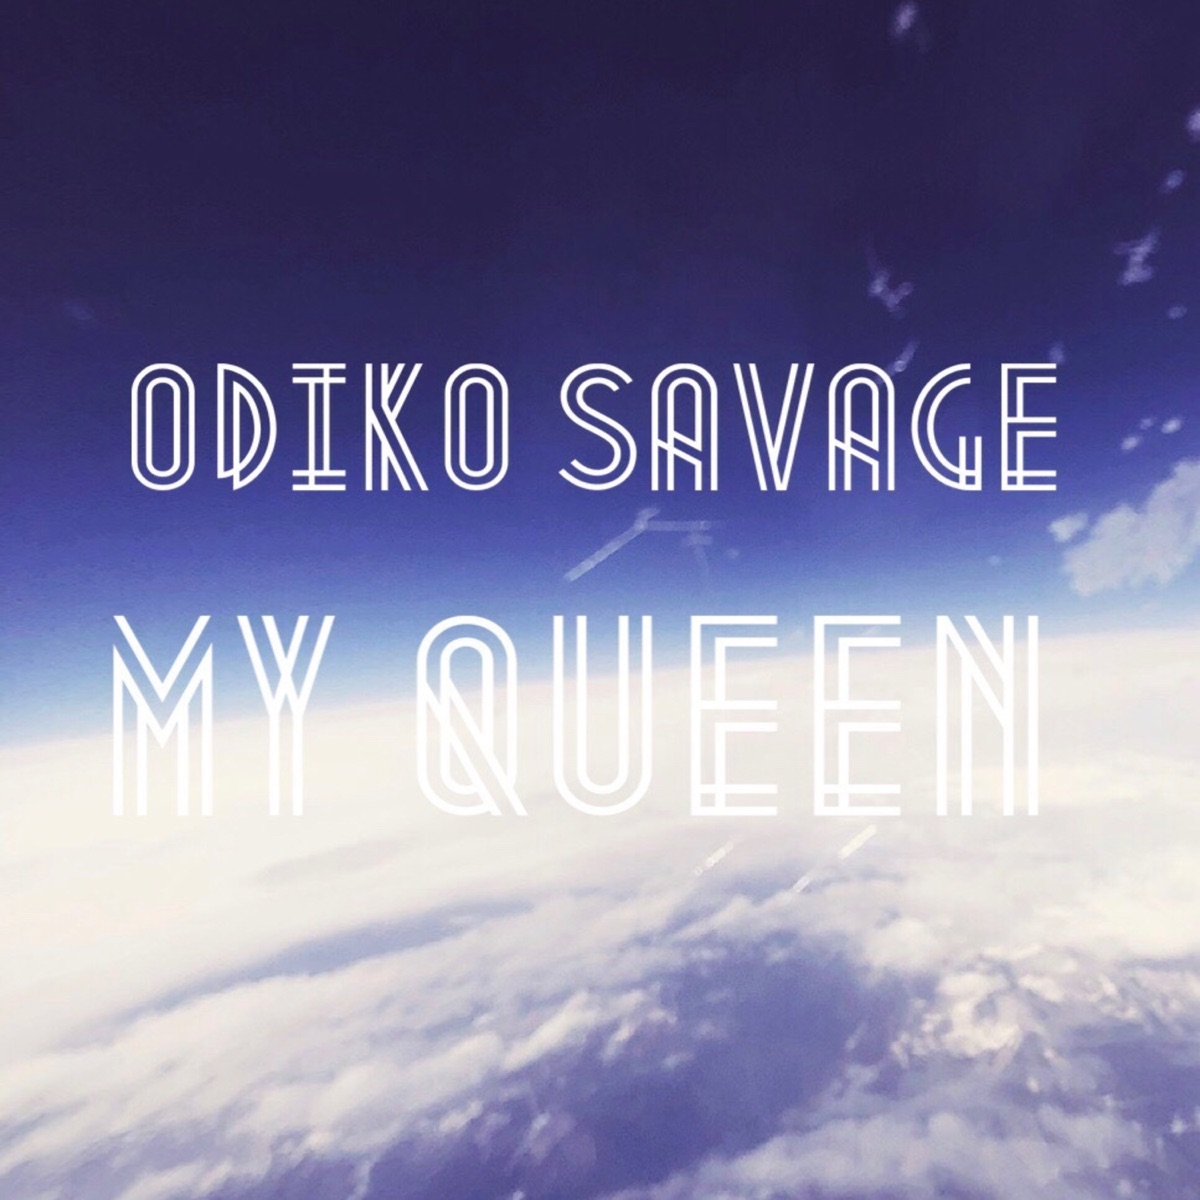 Do U Remember - Single - Album by ODIKO SAVAGE - Apple Music